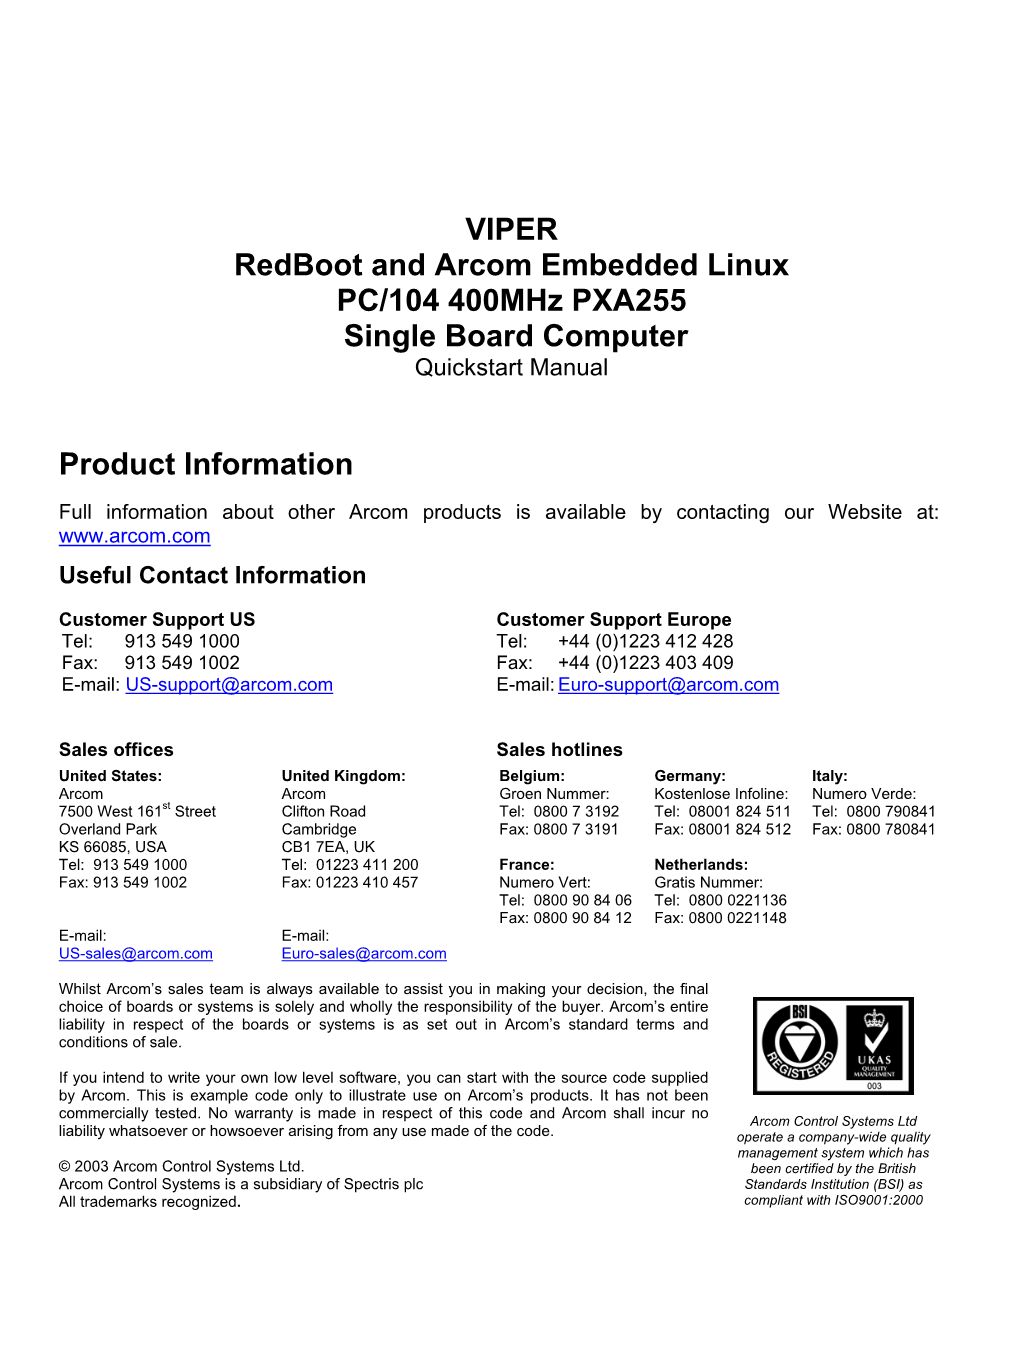 Redboot and Arcom Embedded Linux PC/104 400Mhz PXA255 Single Board Computer Quickstart Manual